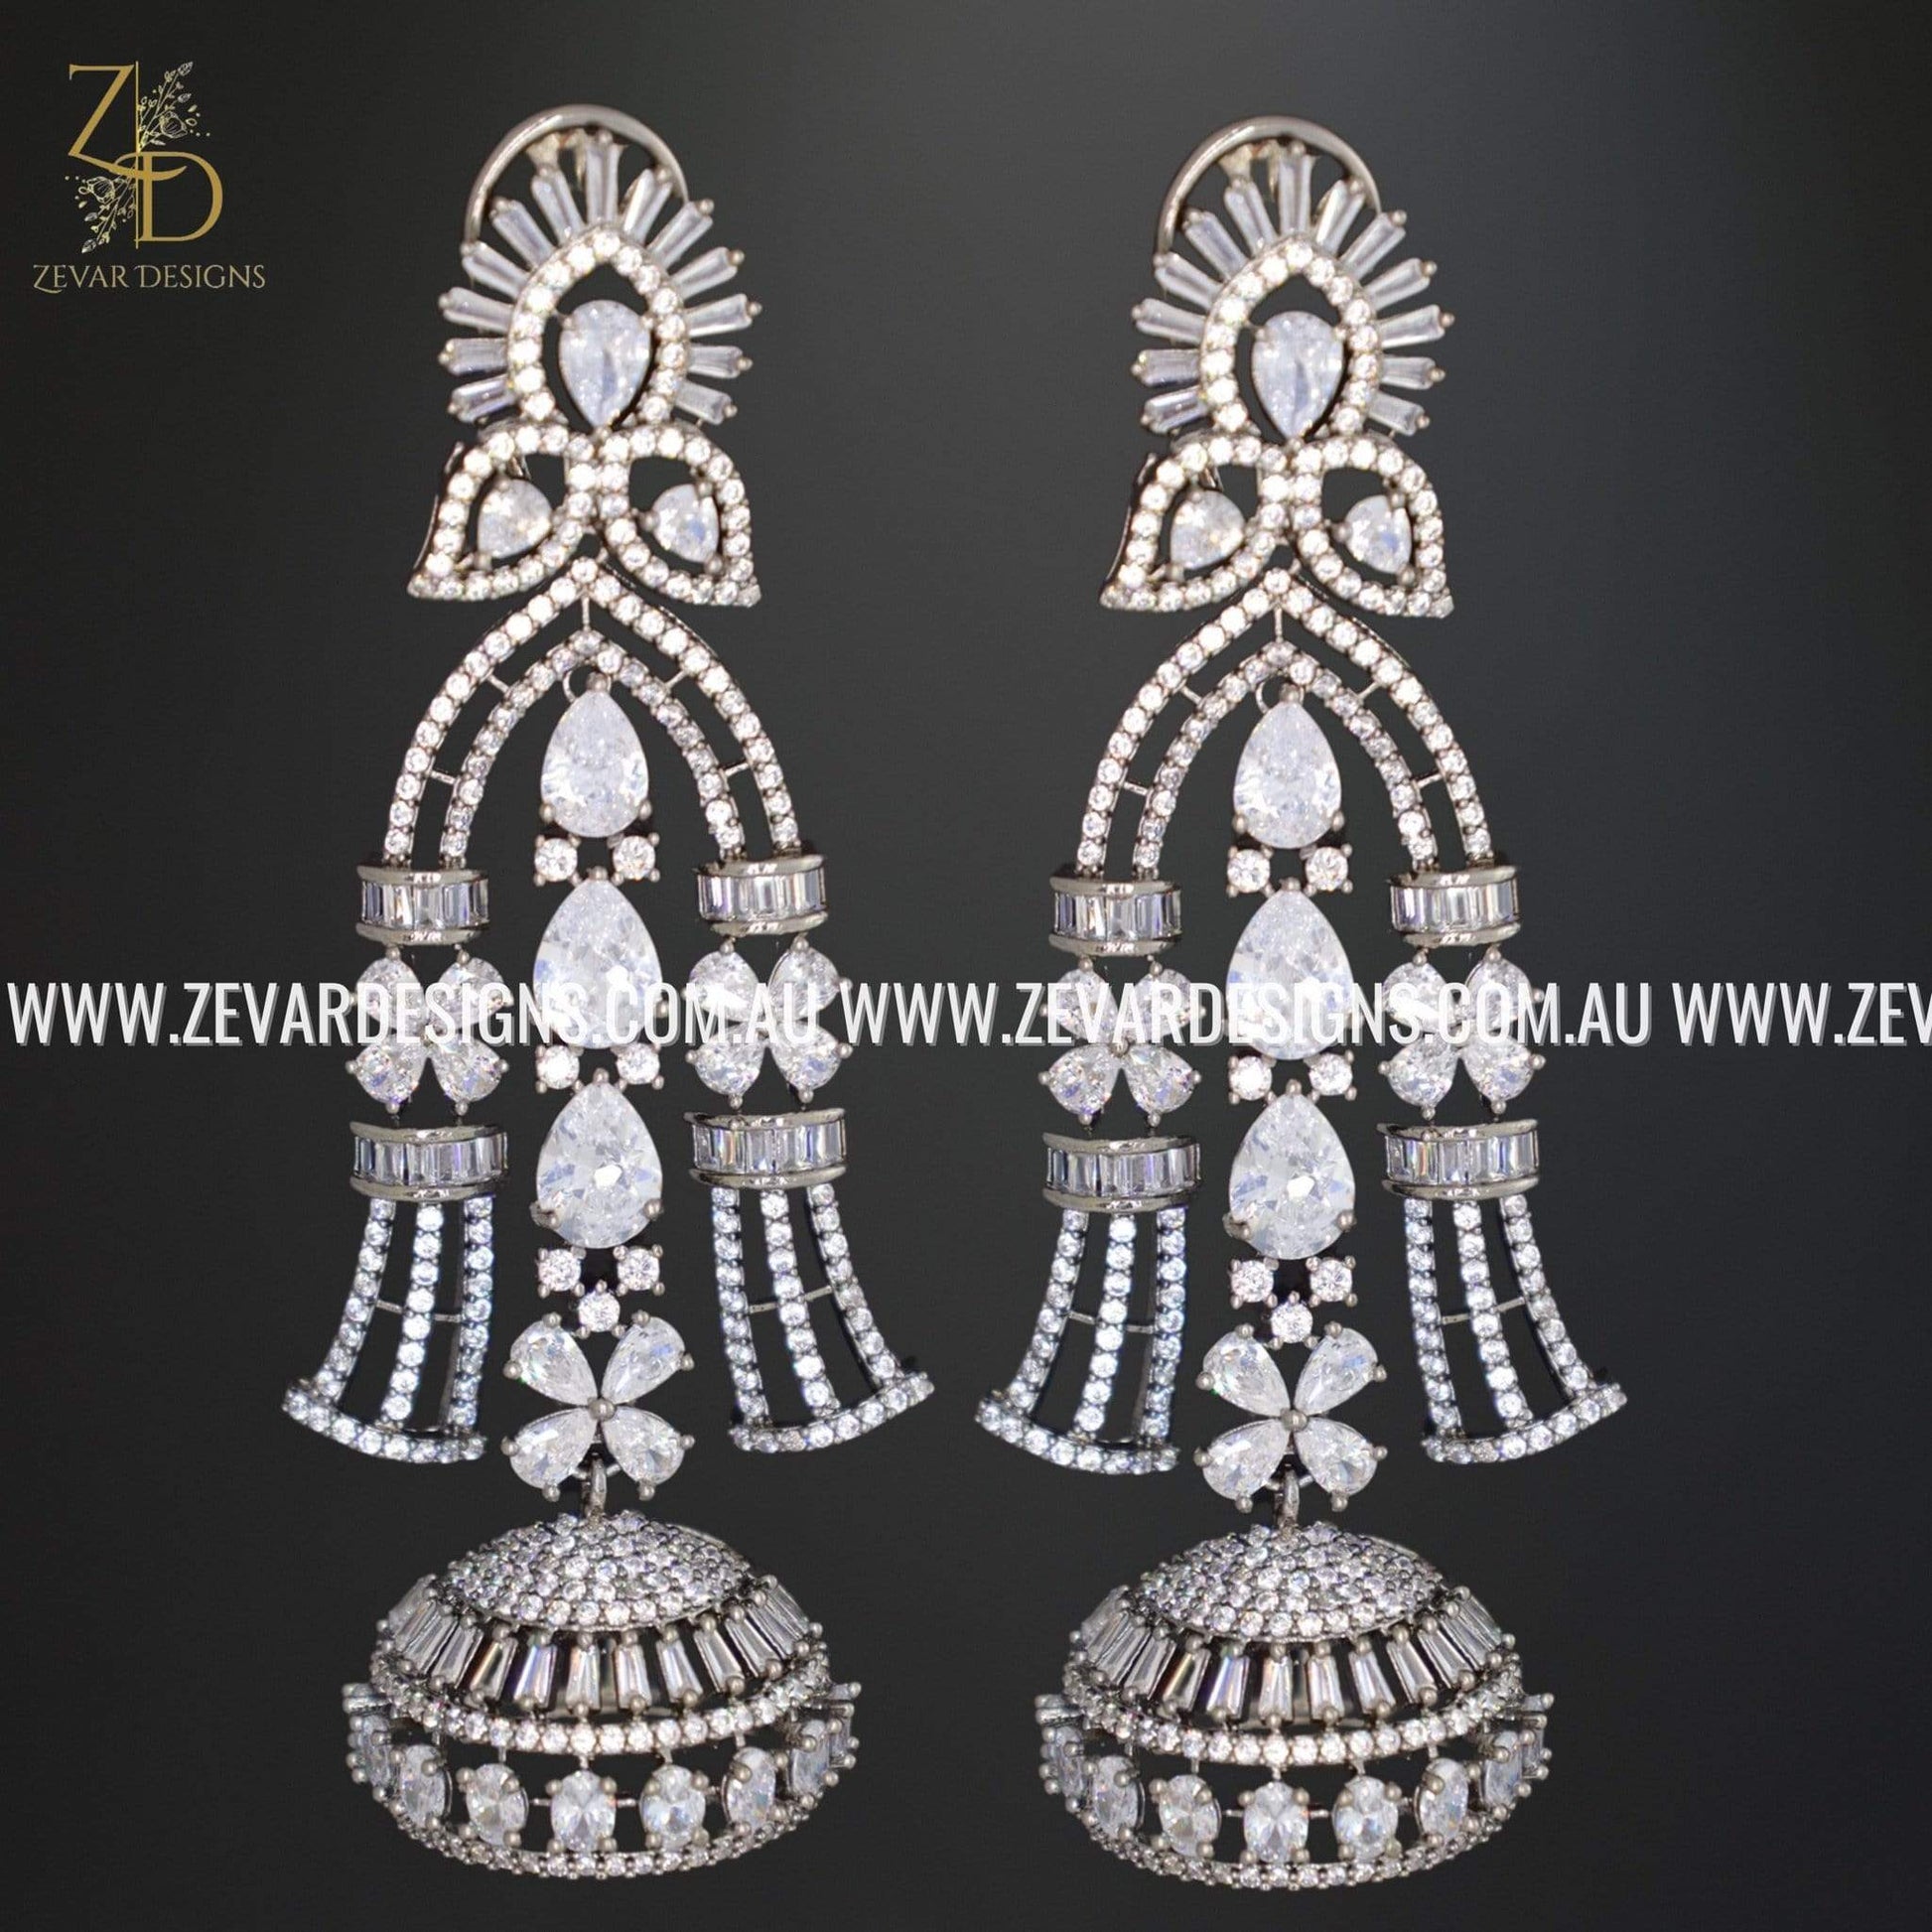 Zevar Designs Indo-Western Earrings Zirconia Statement Earrings - Black Rhodium